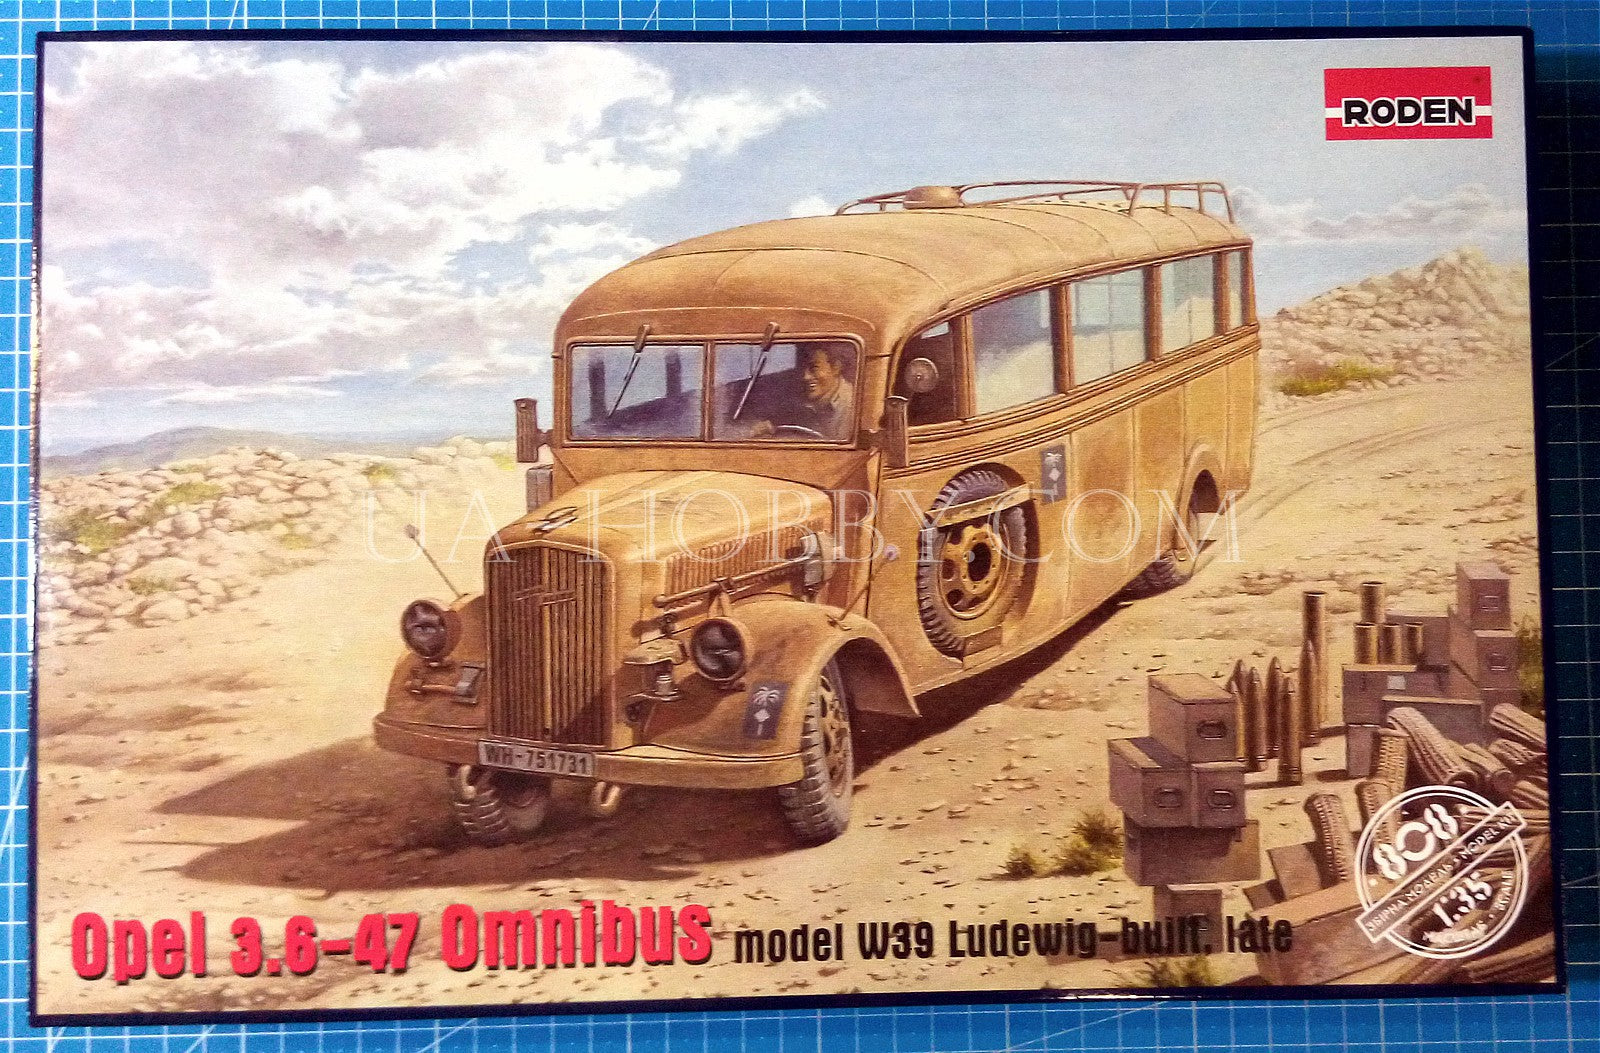 1/35 Opel 3.6-47 Omnibus model W39 Ludewig-built, late